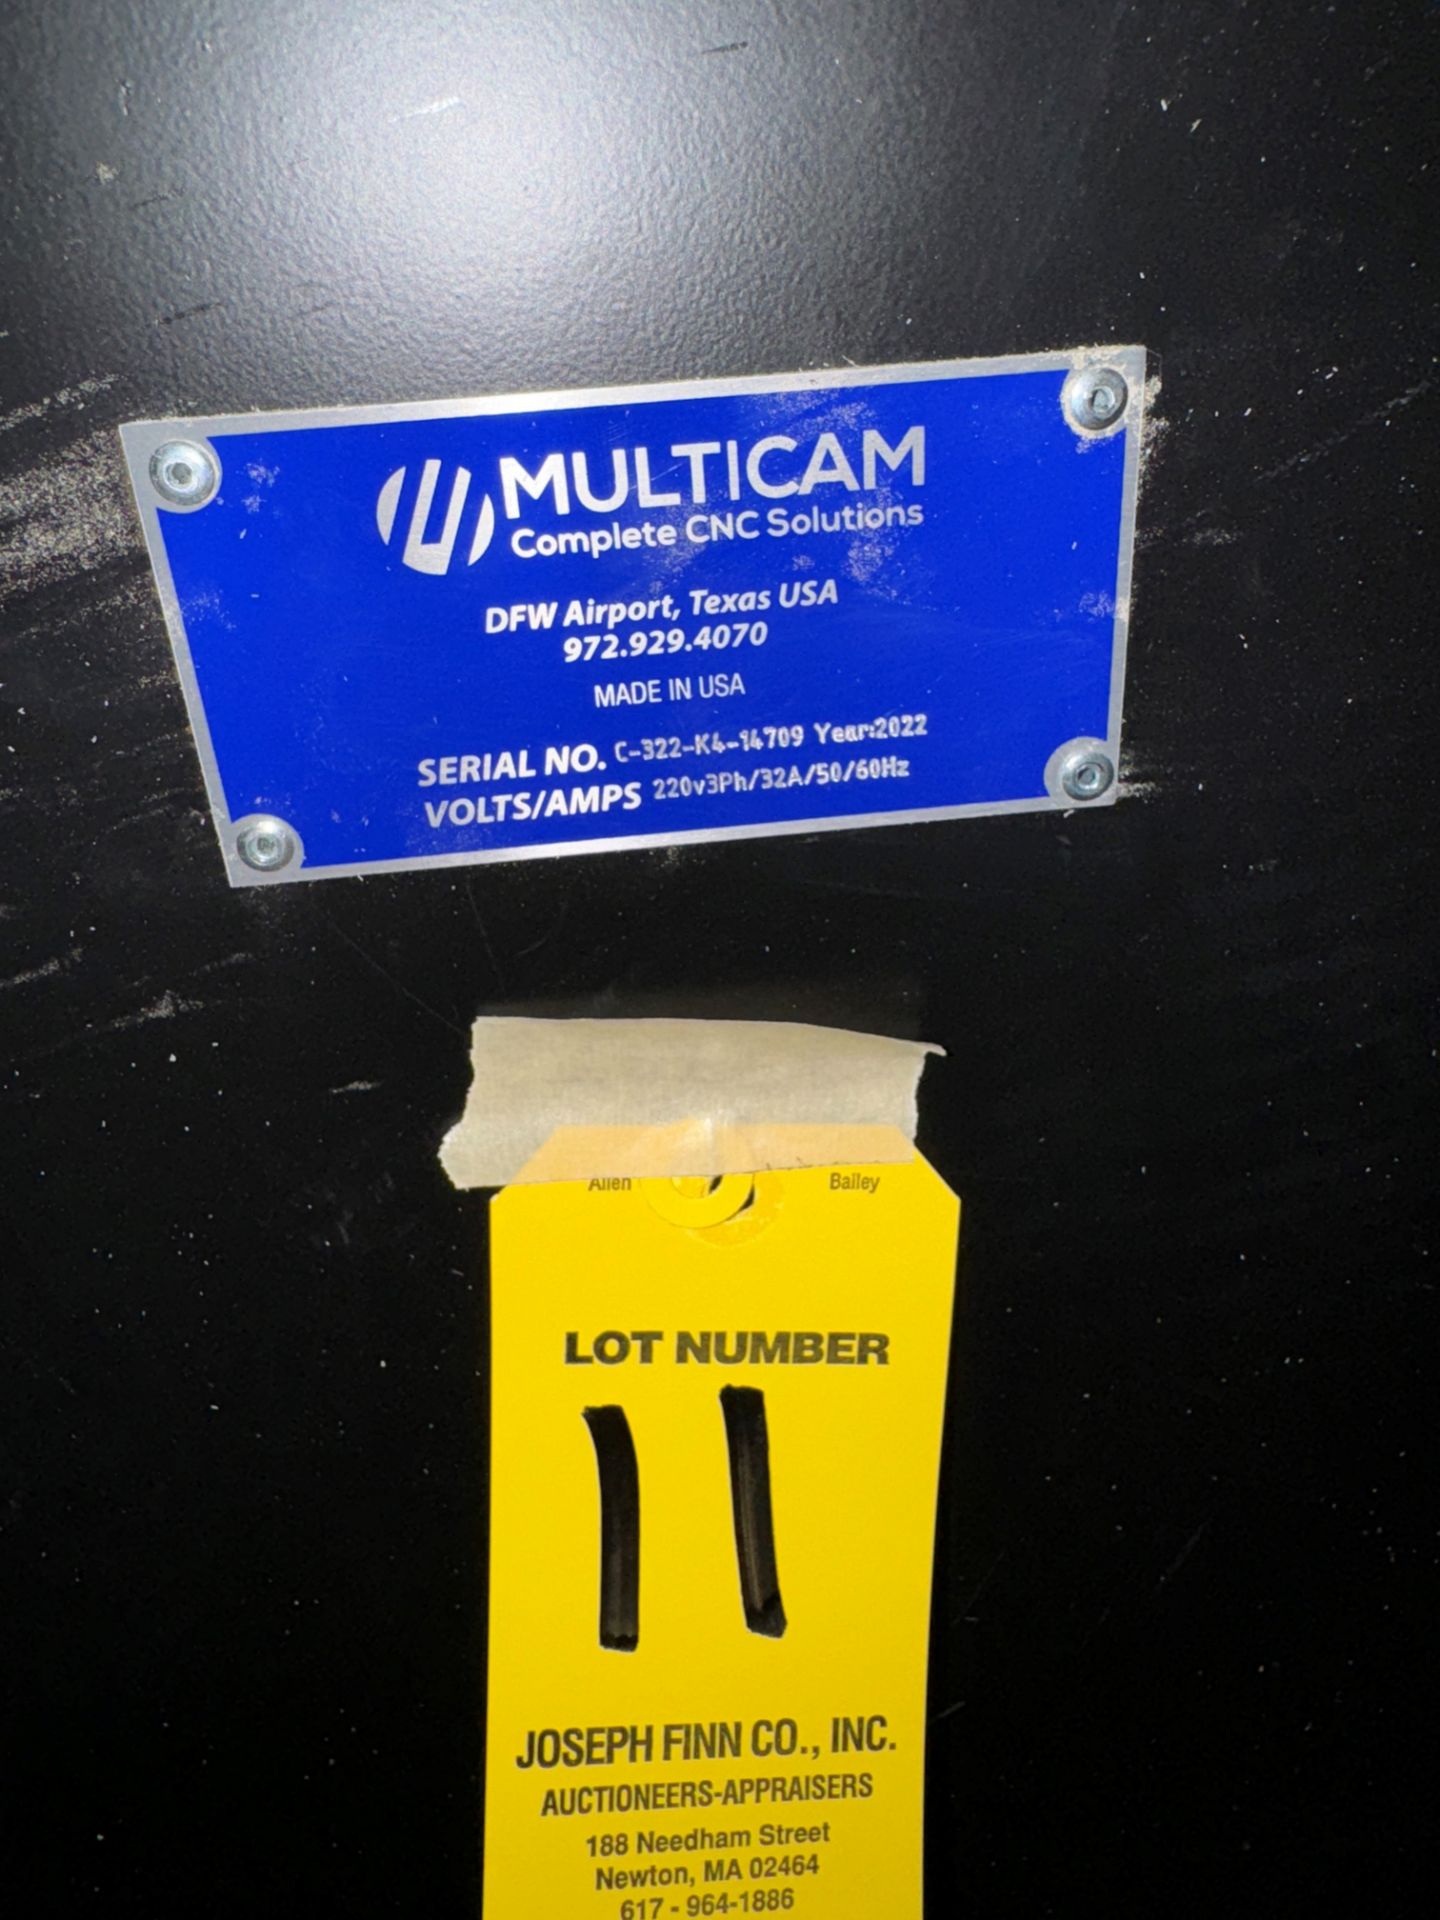 2022 Multicam Celero 4322 Wide Format Digital Cutting System, S/N C322-K | Rig Fee $520 - Image 6 of 13